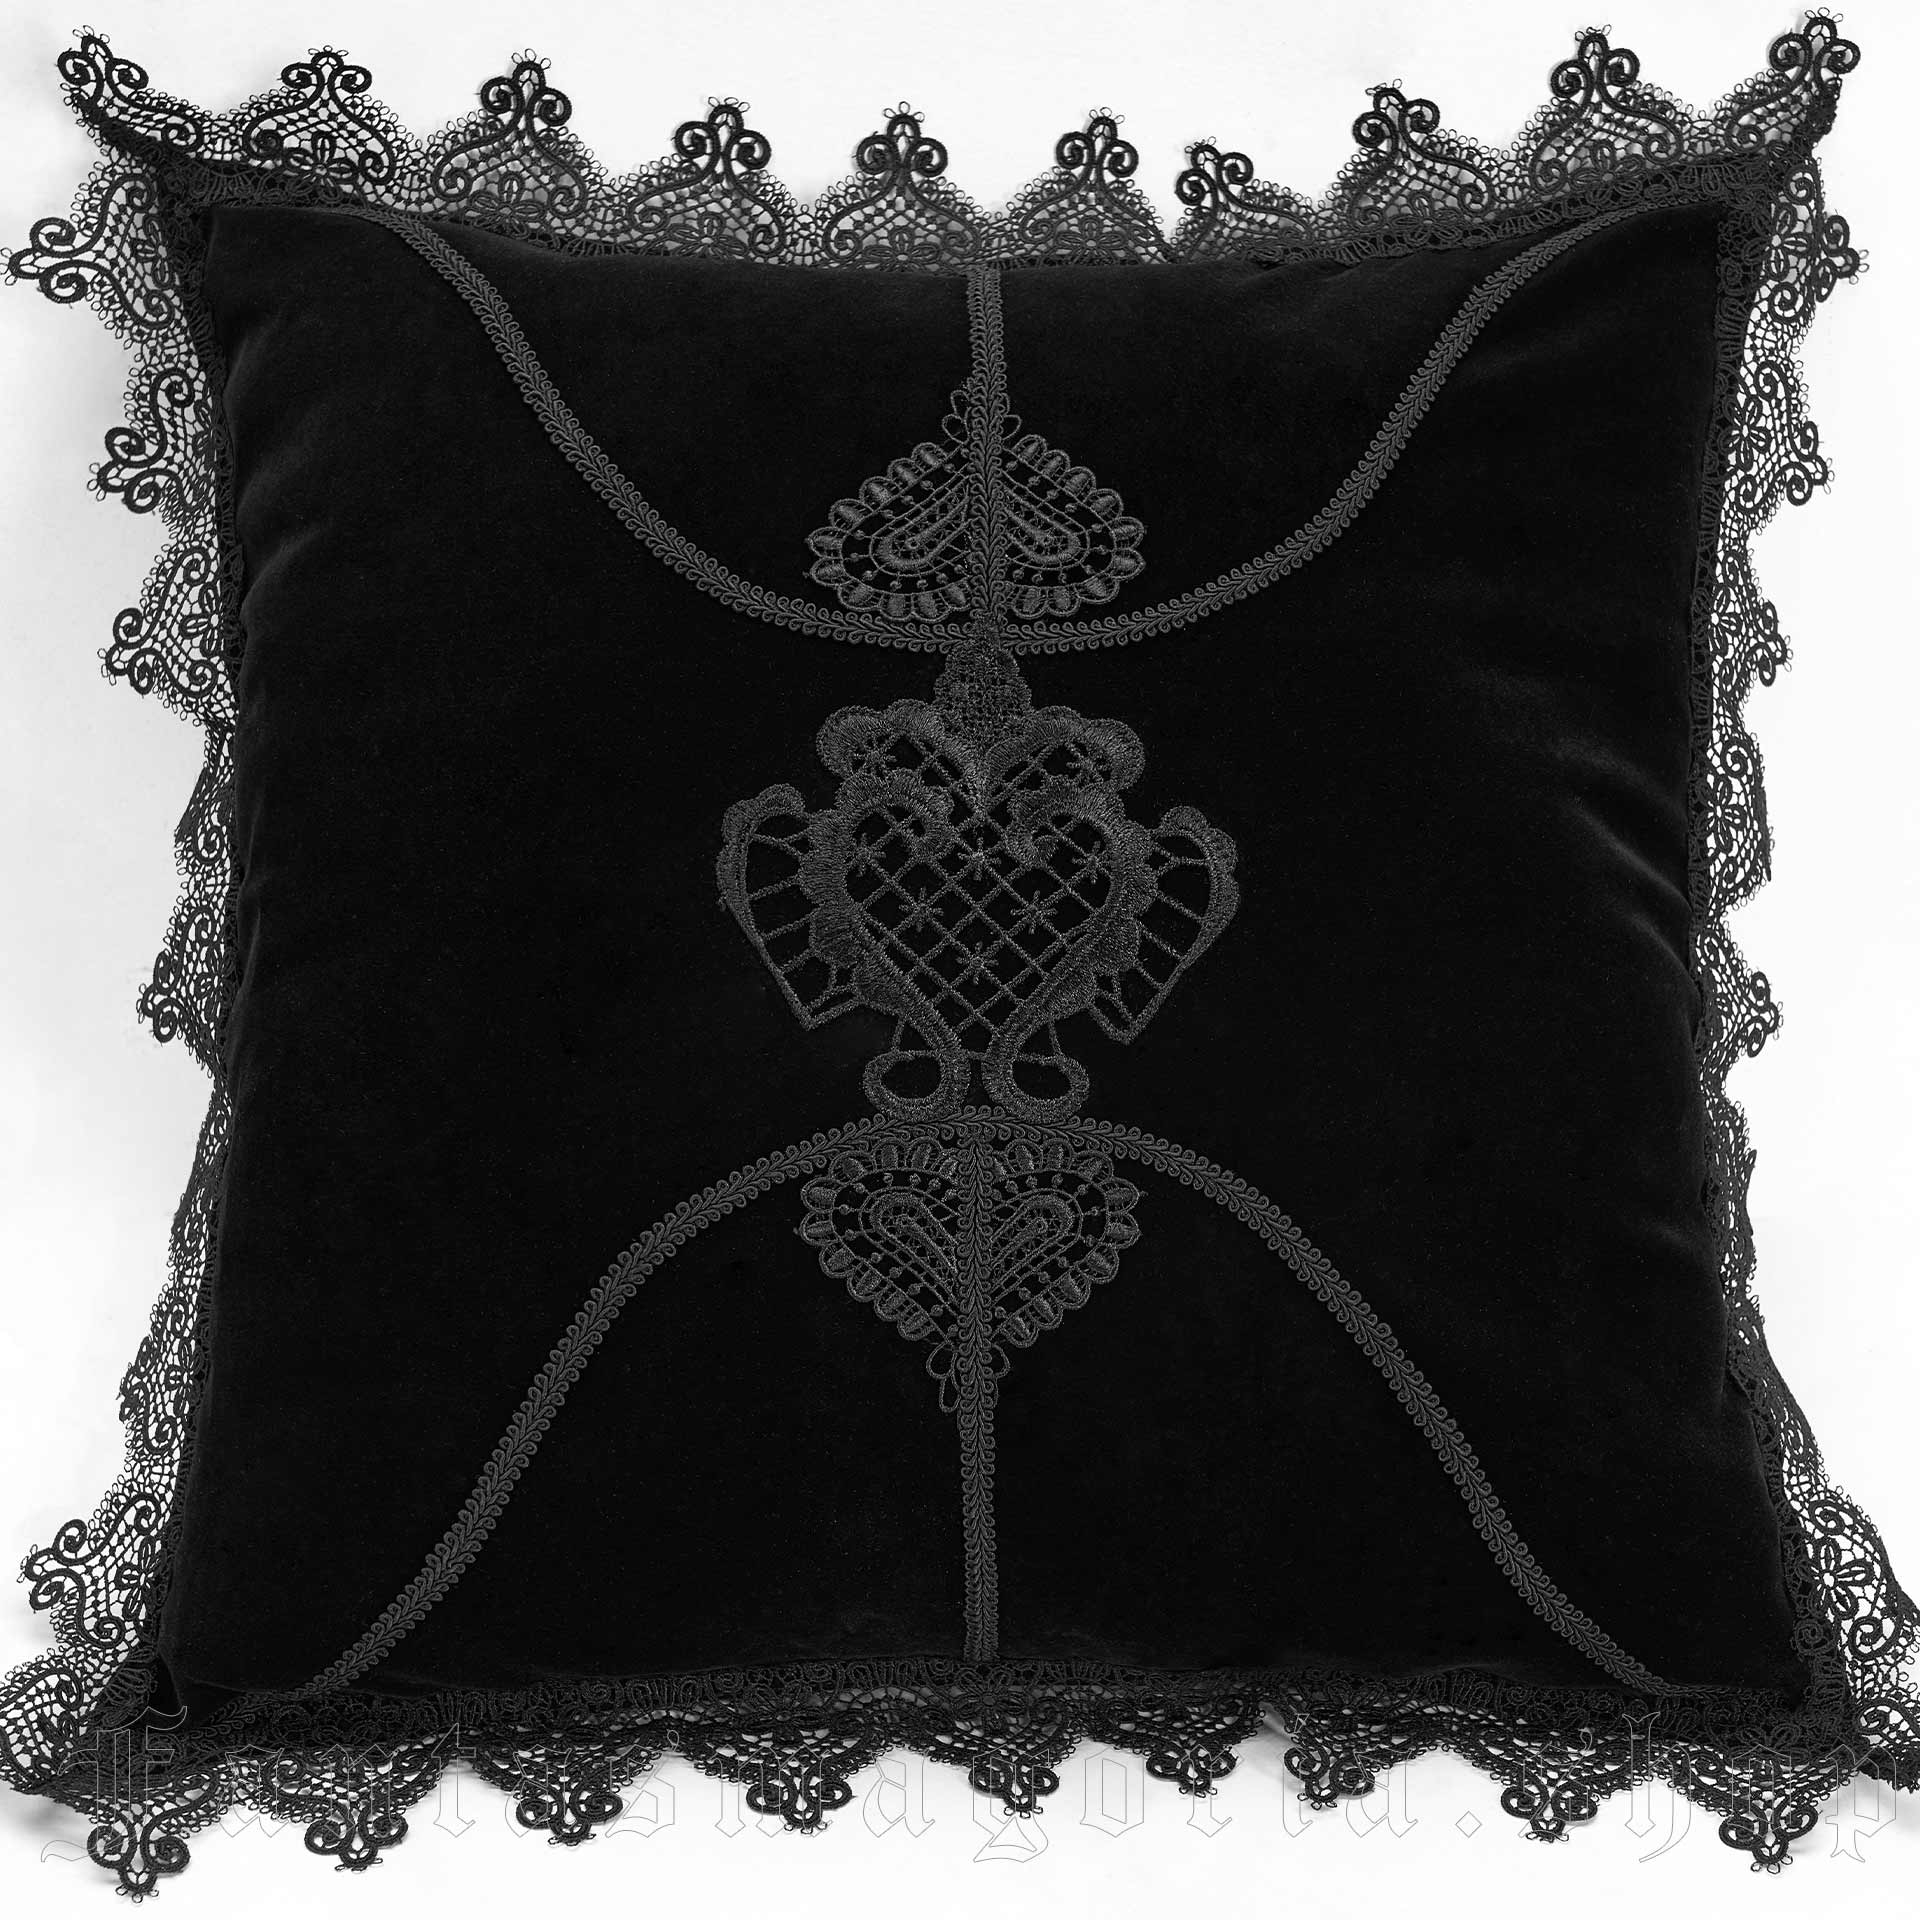 Gothic style decorative black pillow case.